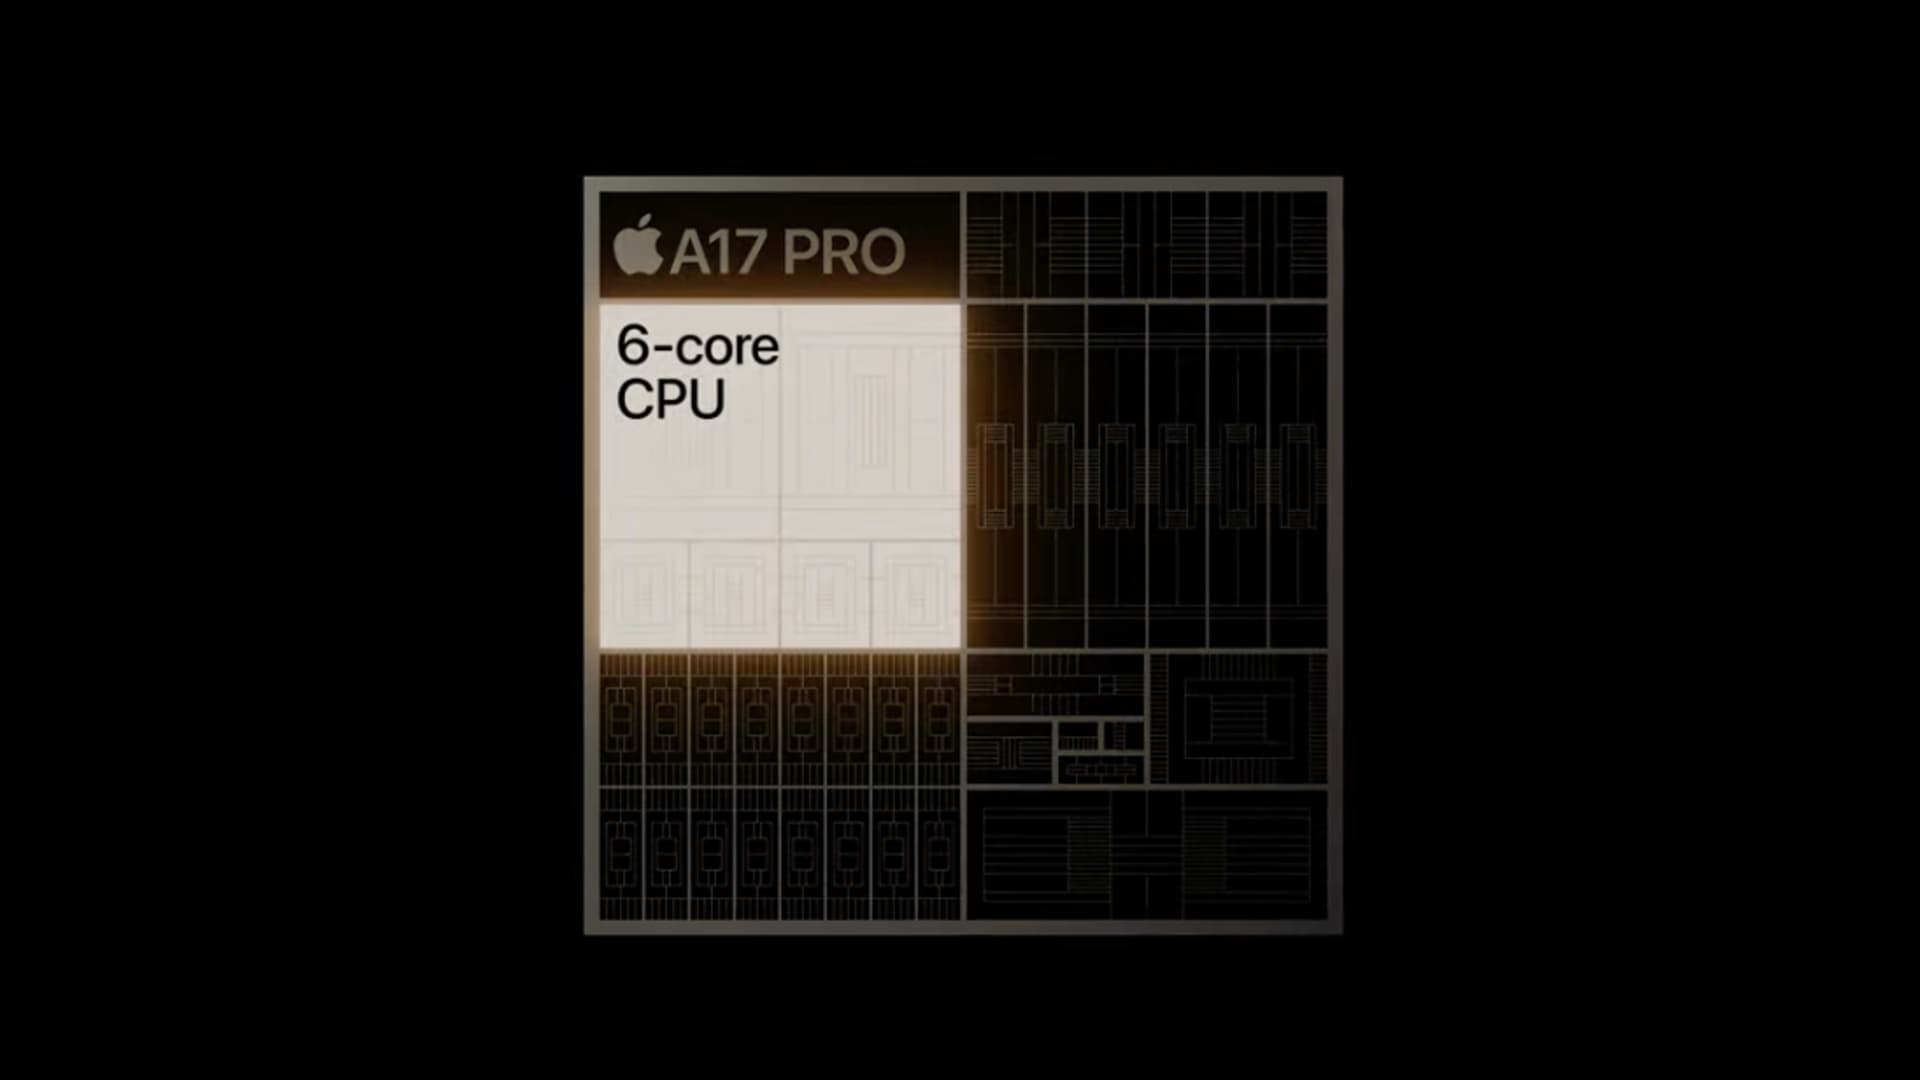 Apple iPhone Pro A17 Pro chip.